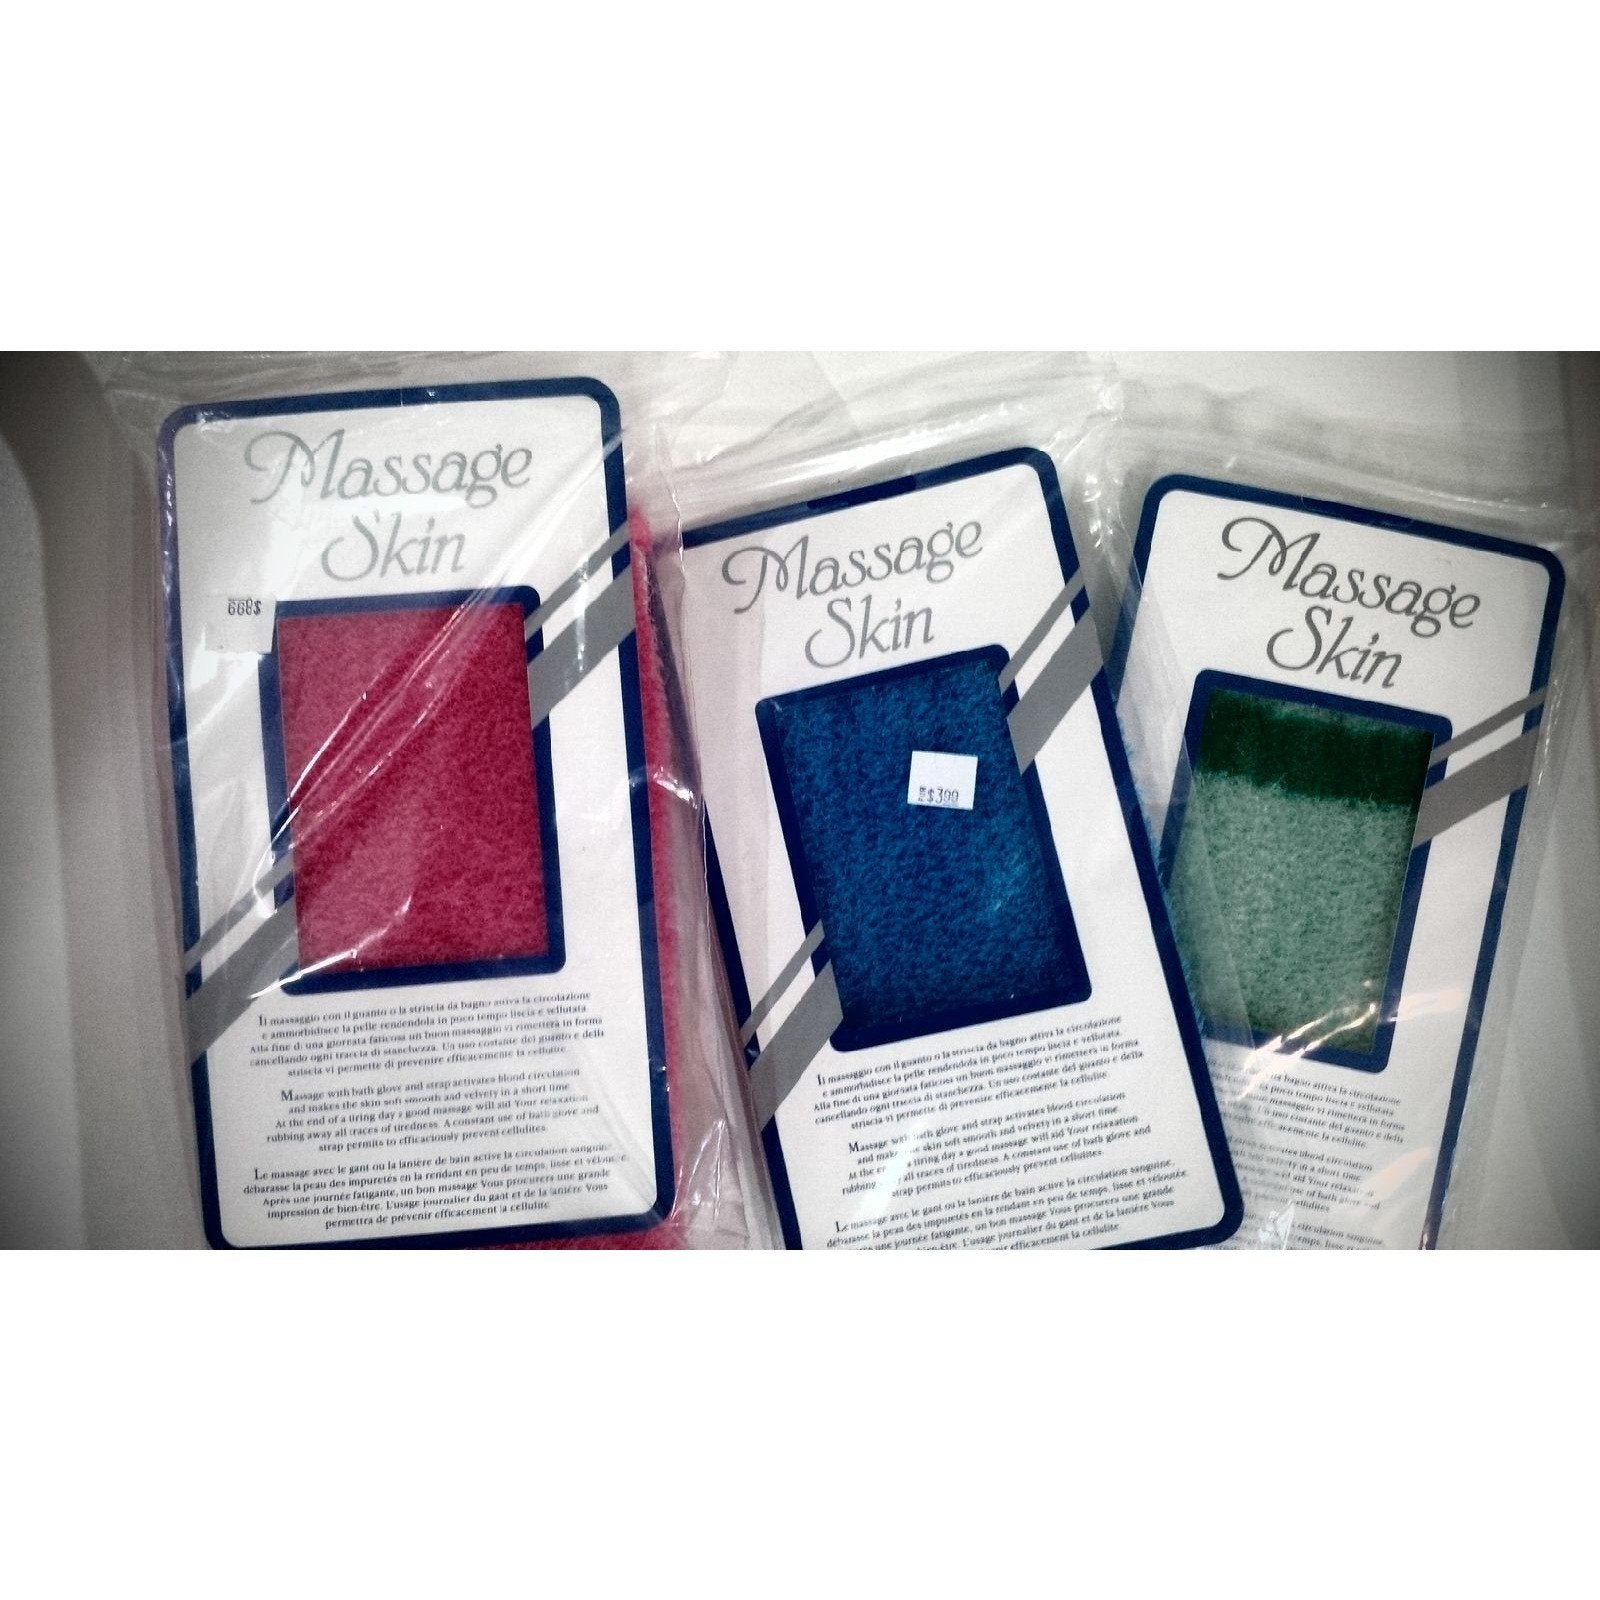 Skin Care - Magit Exfoliation Gloves & Straps - Assorted Colors - Breizh Esthetic & Salon Supply